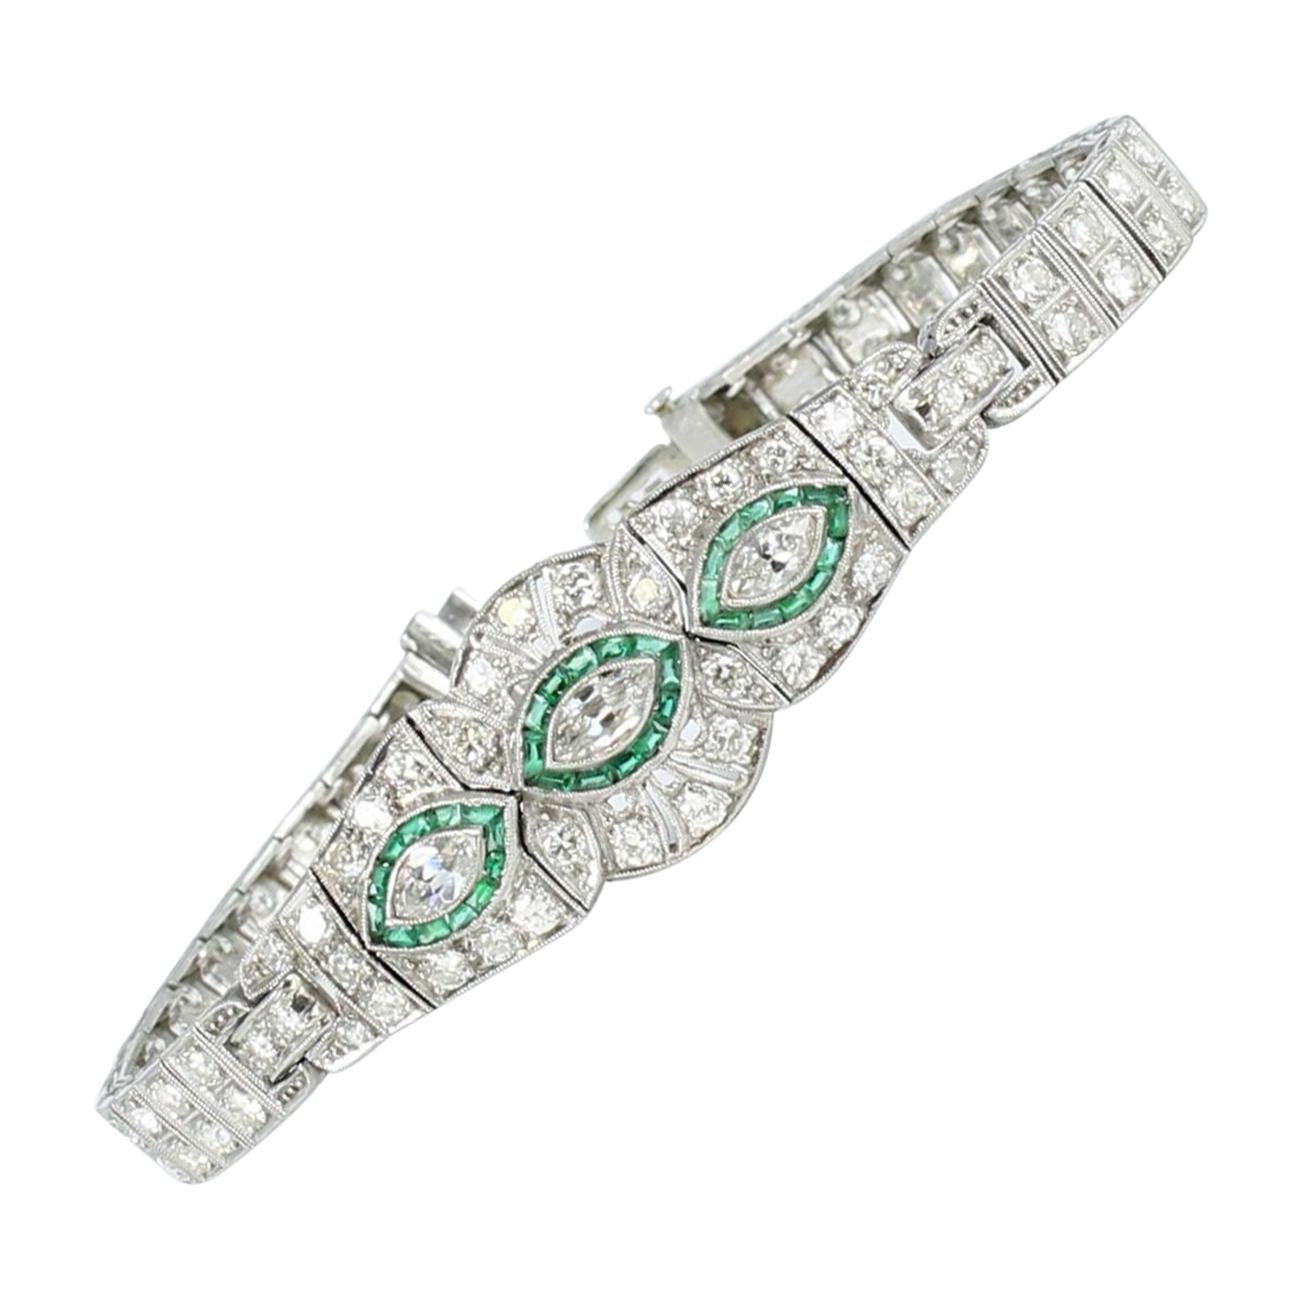  Art Deco Diamond and Emerald Bracelet in Platinum For Sale